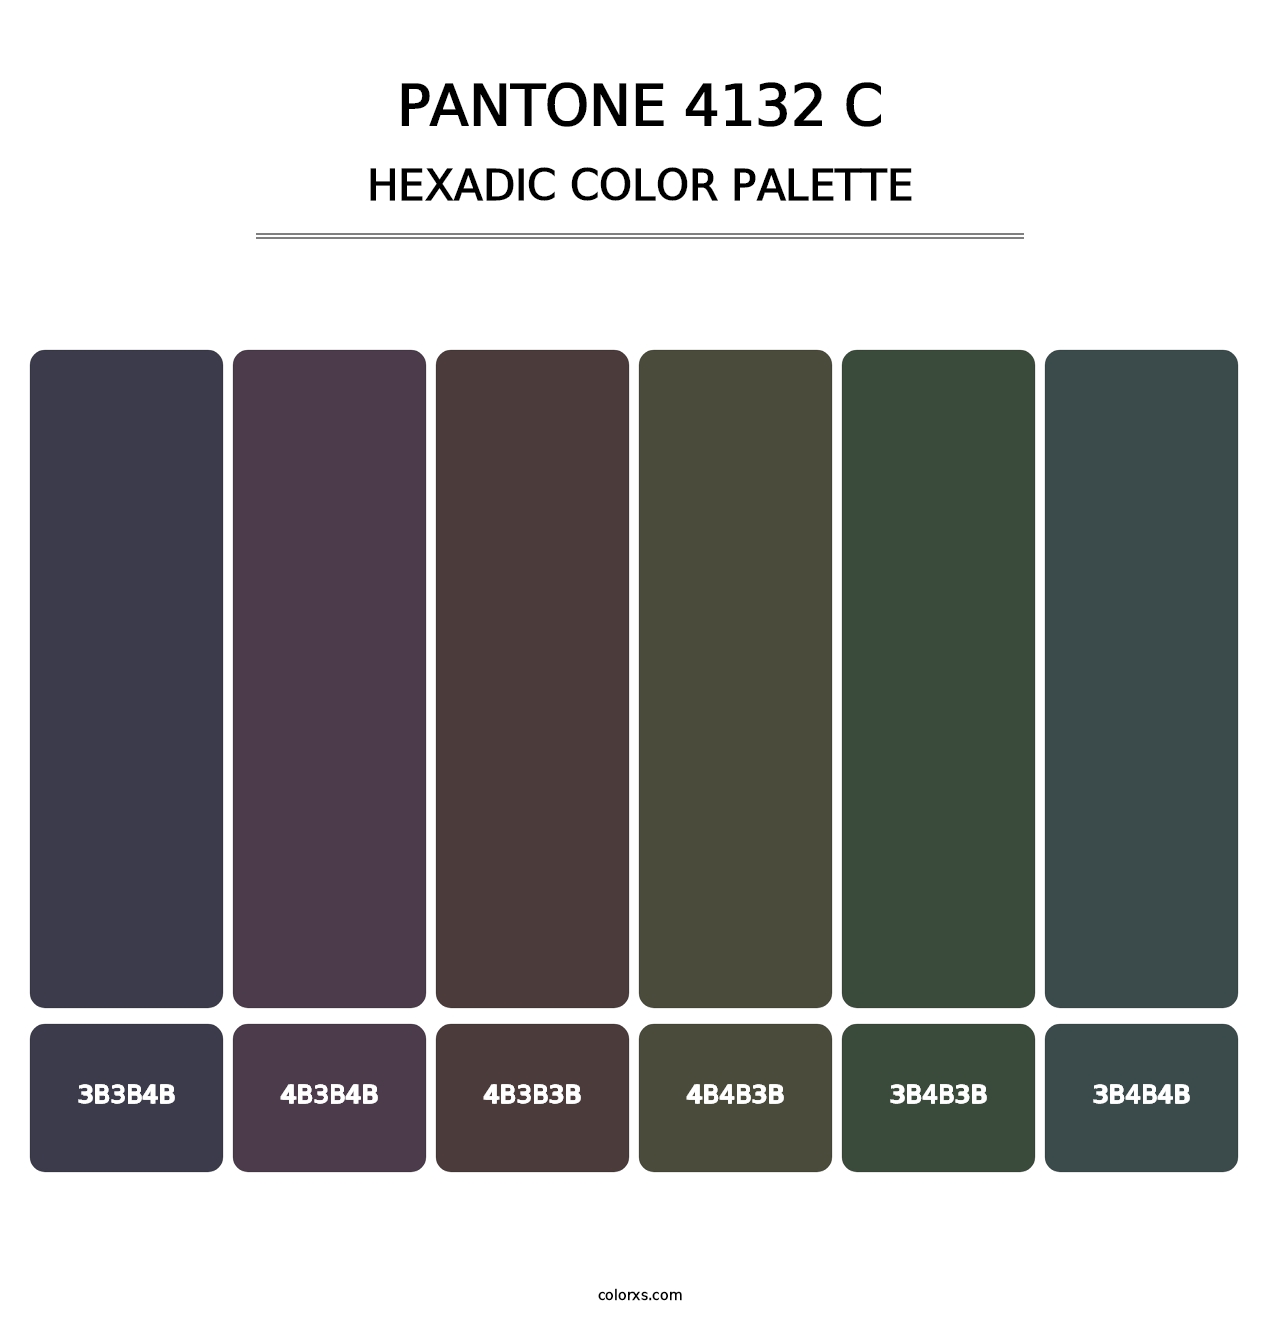 PANTONE 4132 C - Hexadic Color Palette